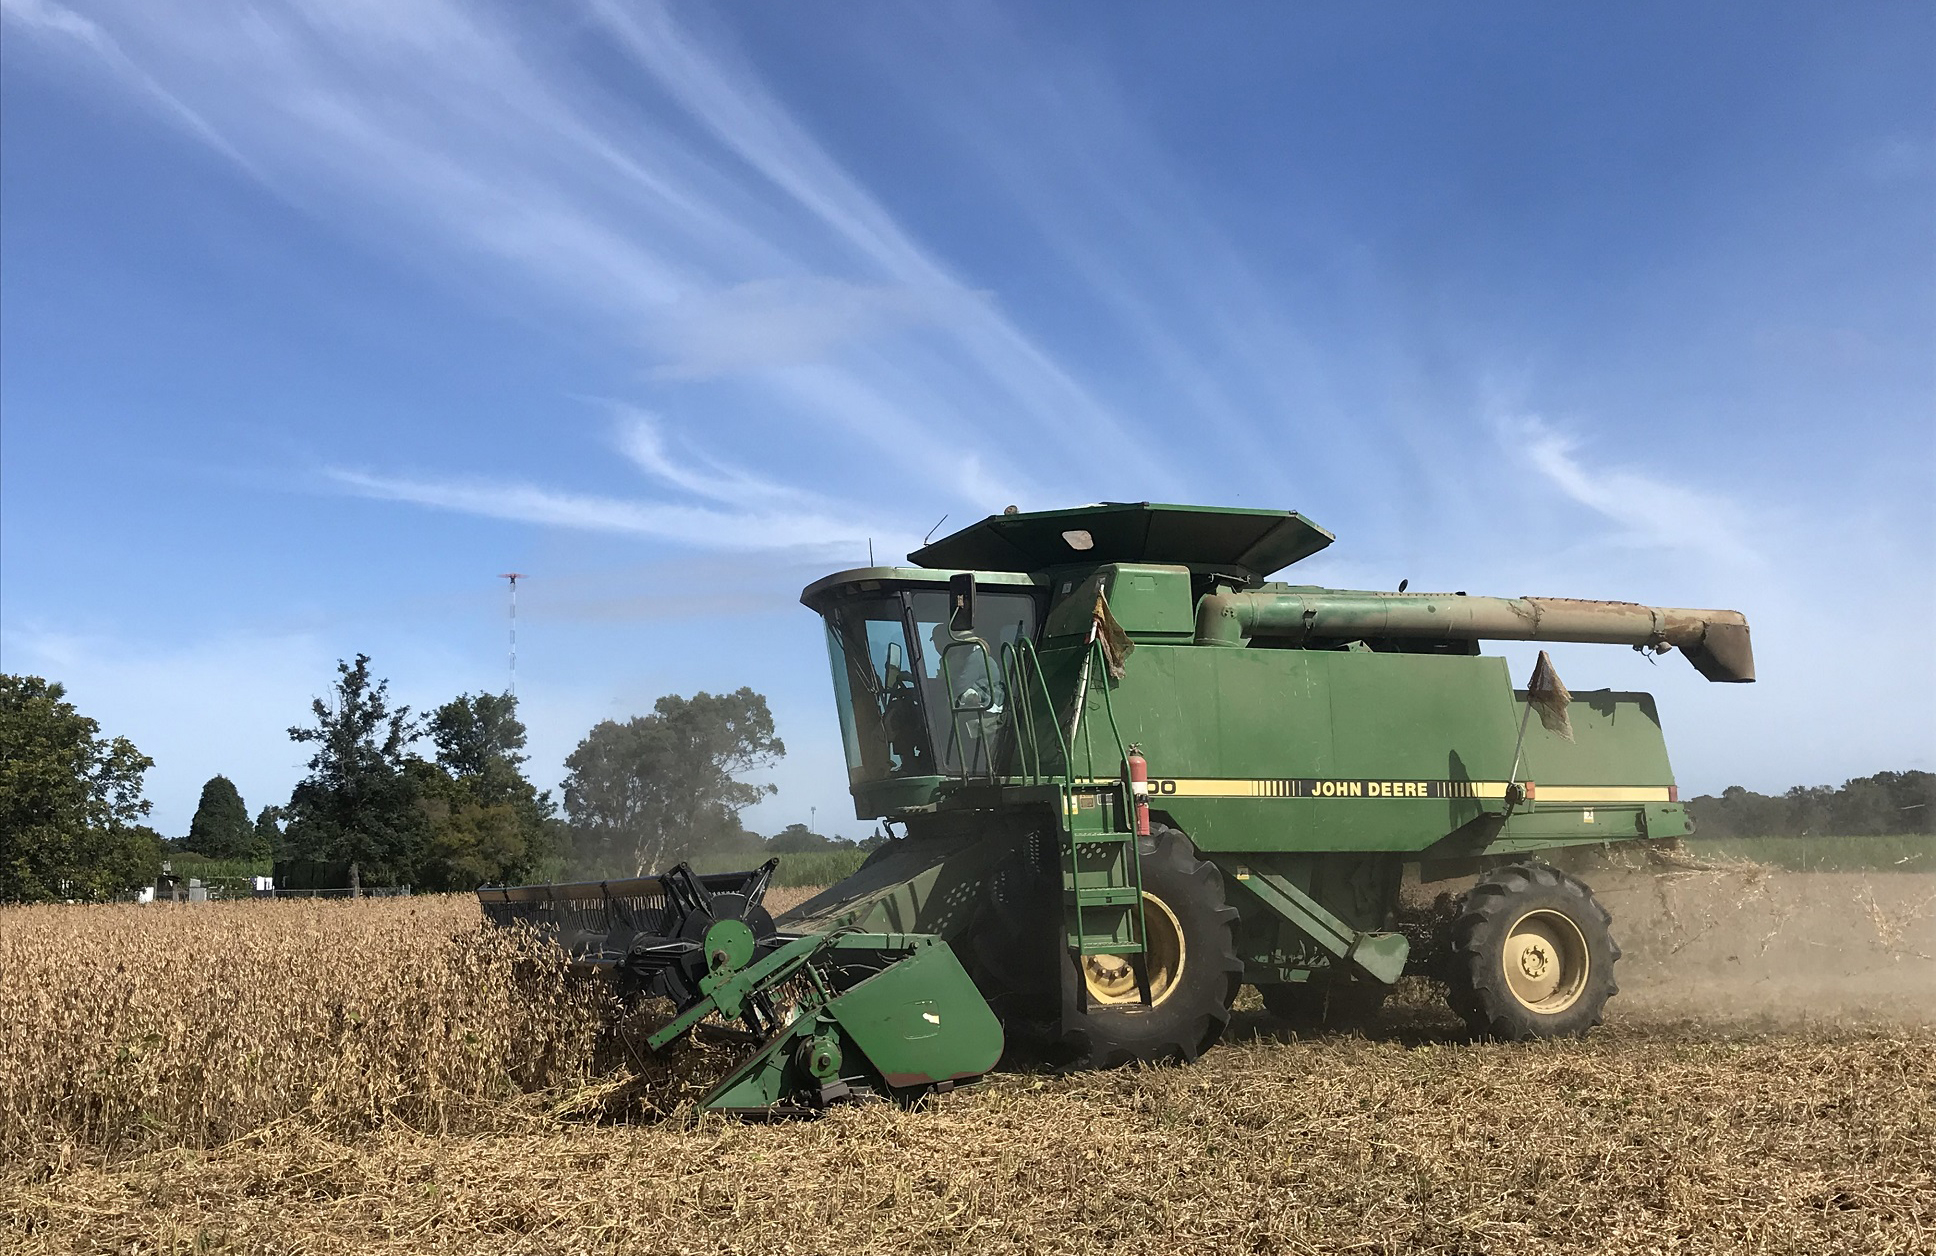 A harvesting machine harvesting soy beans